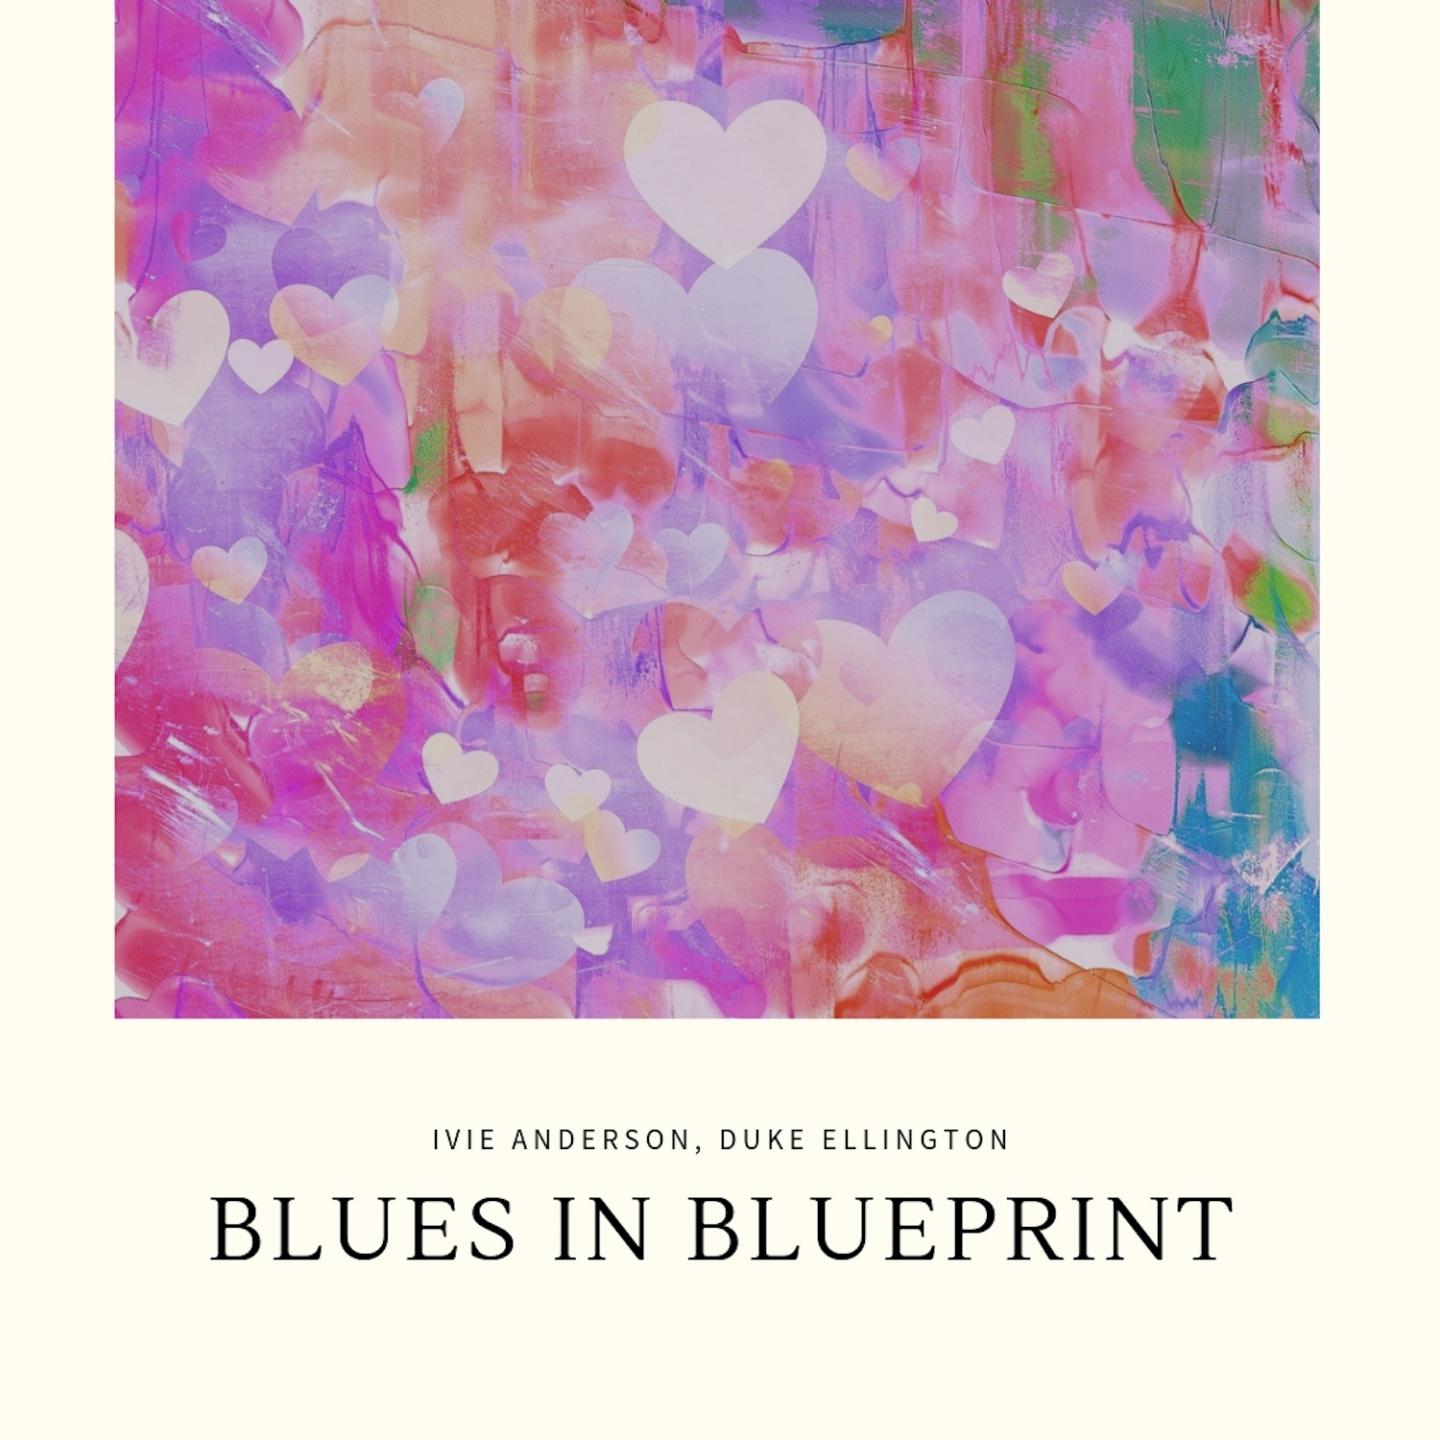 Blues in Blueprint